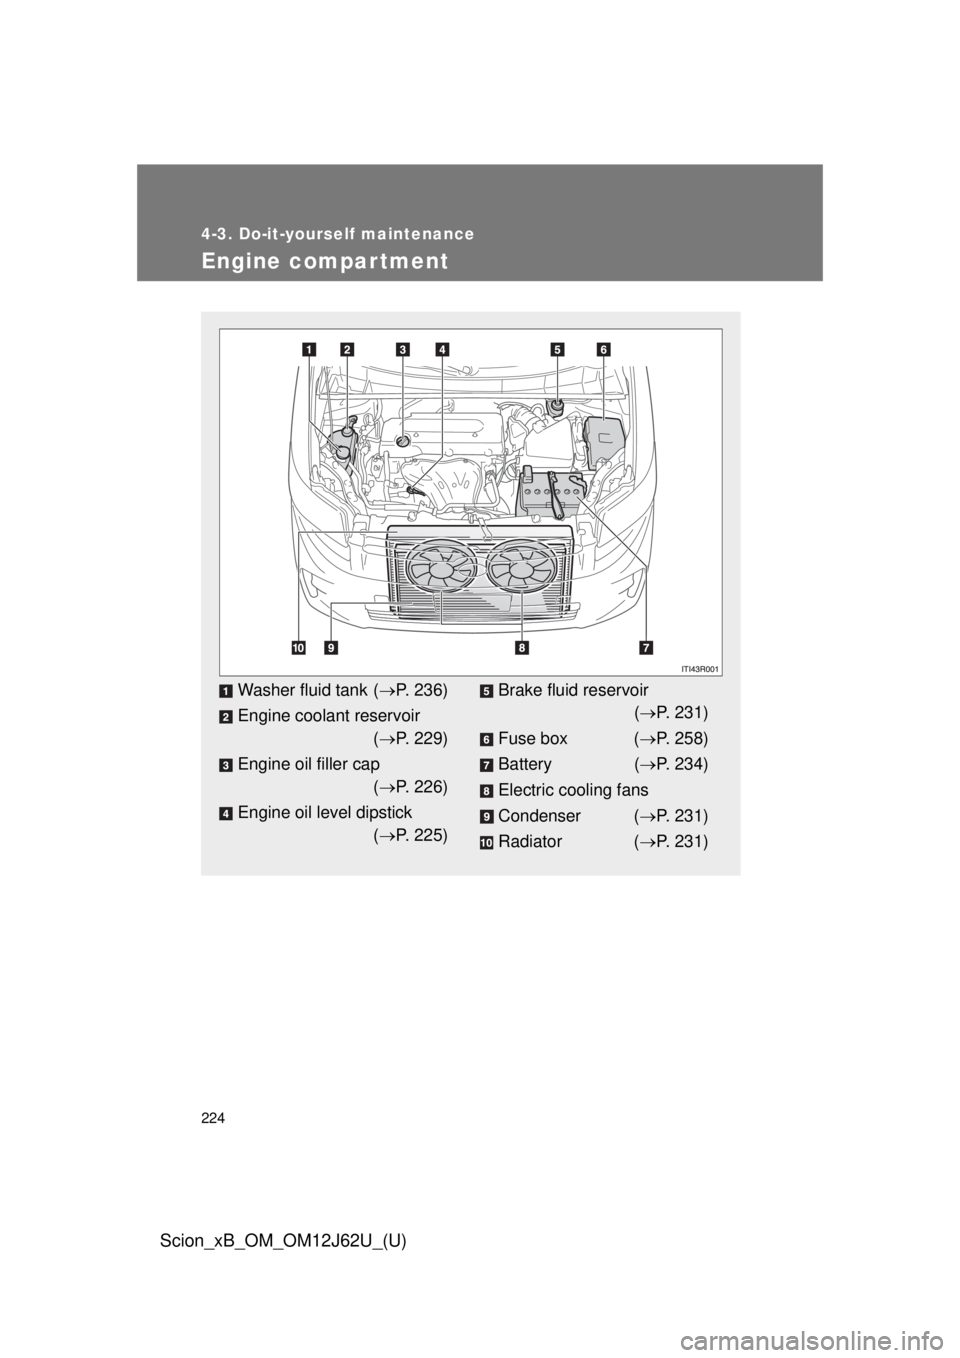 TOYOTA xB 2014  Owners Manual (in English) 224
4-3. Do-it-yourself maintenance
Scion_xB_OM_OM12J62U_(U)
Engine compar tment
Washer fluid tank (P. 236)
Engine coolant reservoir ( P. 229)
Engine oil filler cap ( P. 226)
Engine oil level